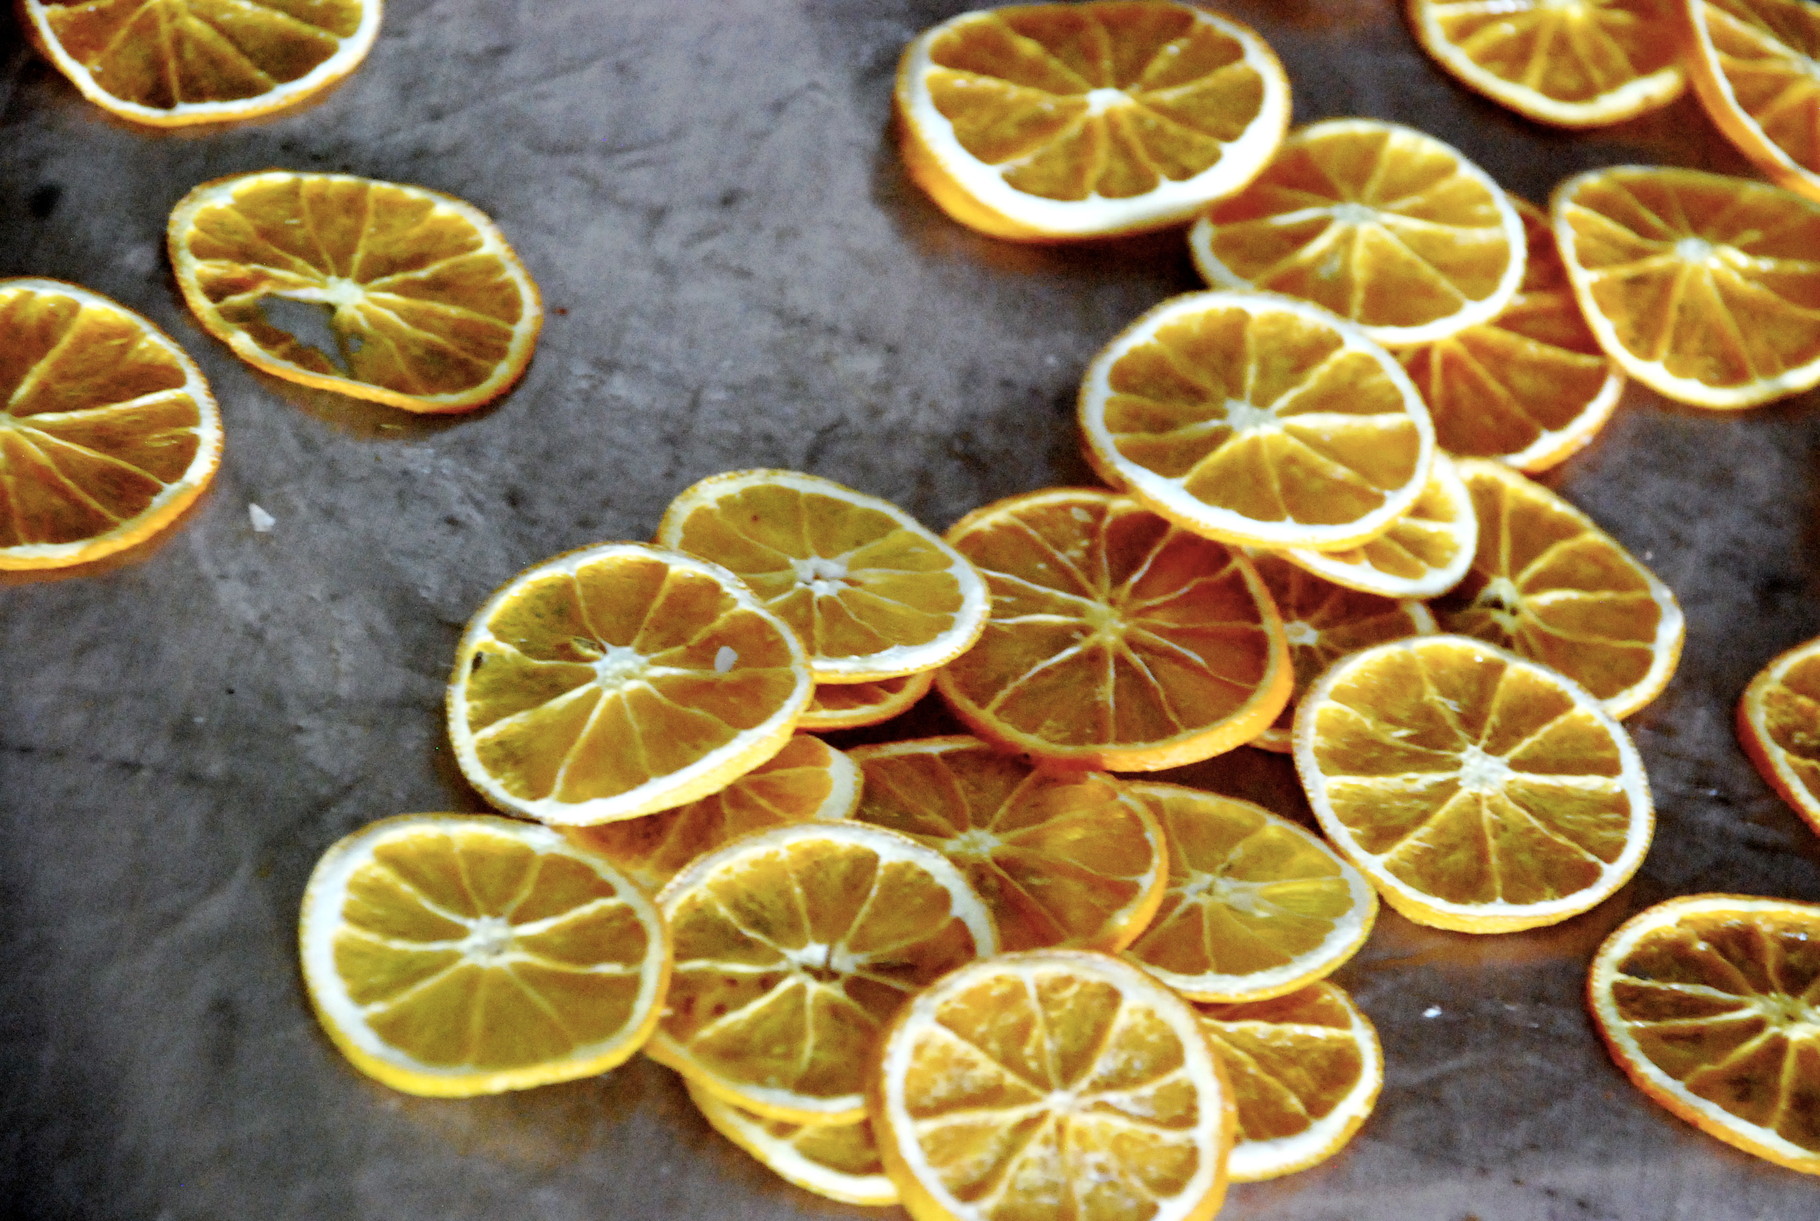 Naranja deshidratada